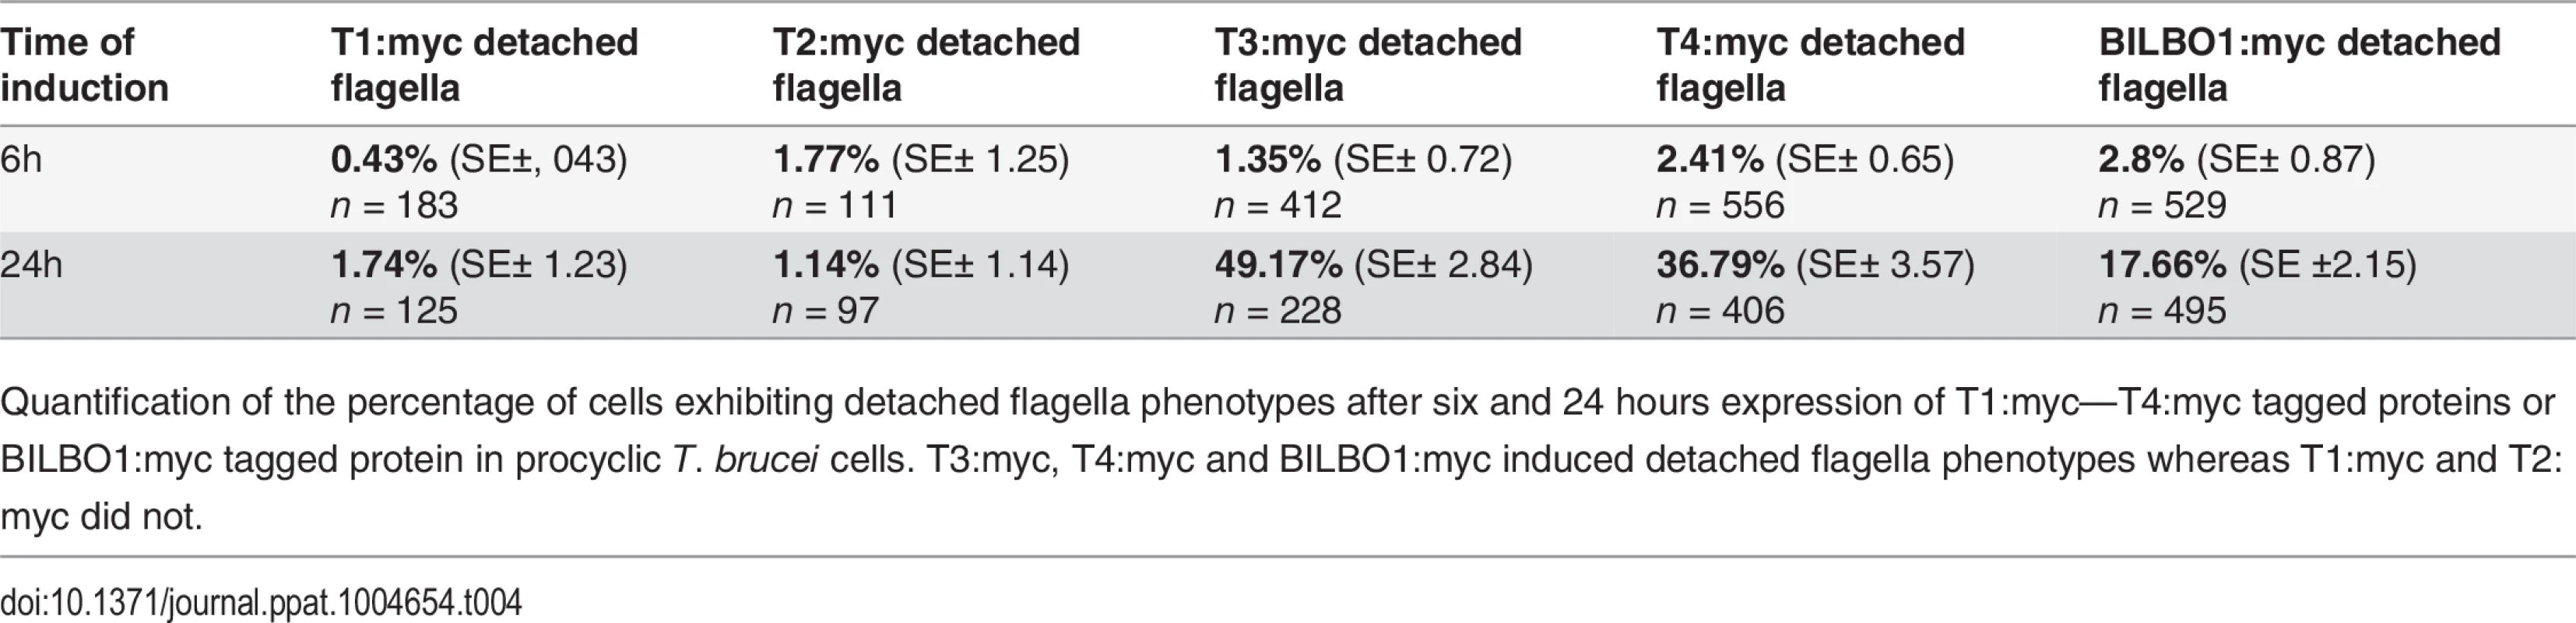 T1:myc—T4:myc and BILBO1:myc detached flagellum phenotypes after expression <i>T. brucei</i> cells.